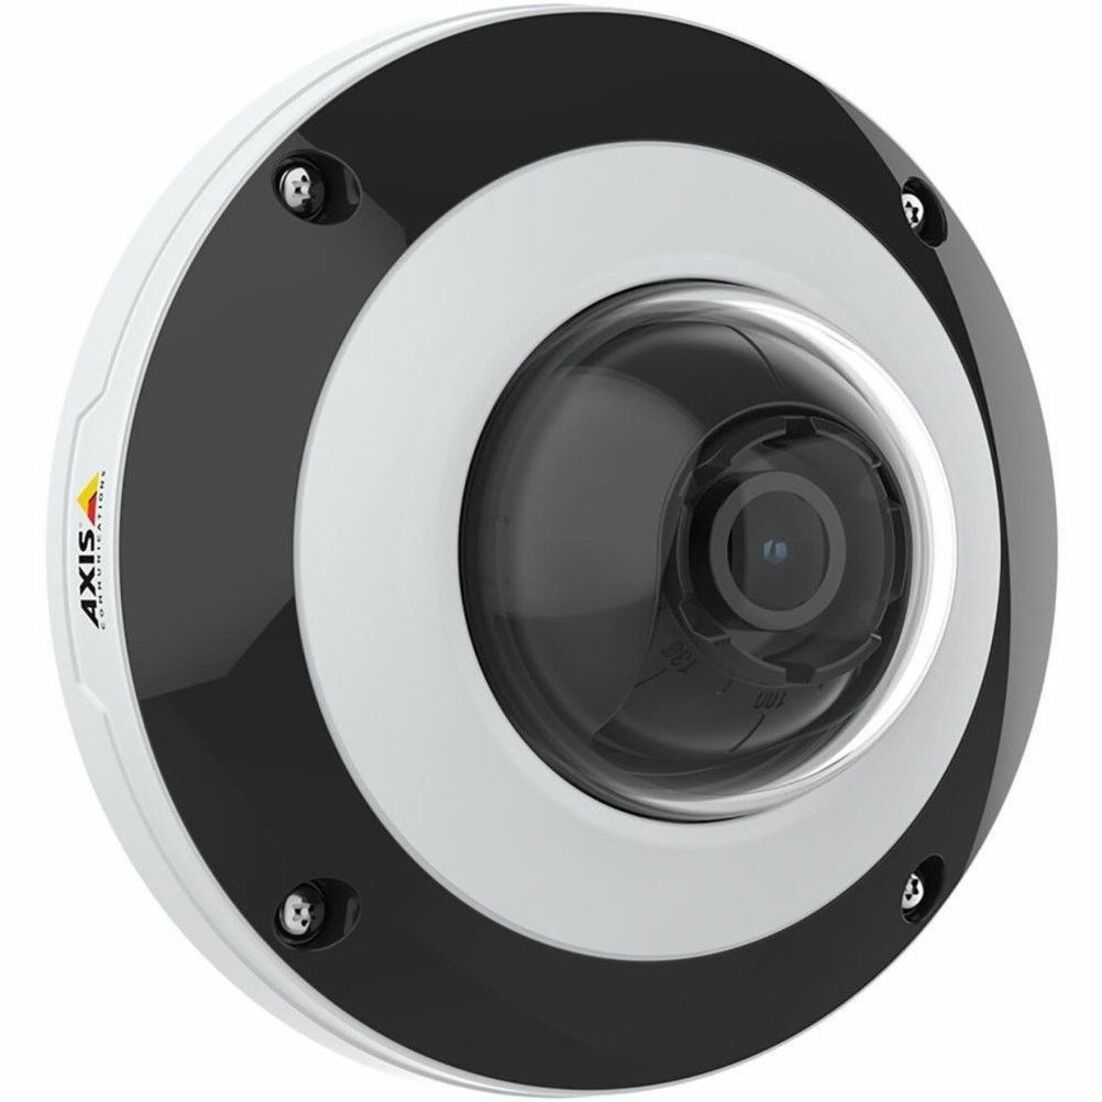 AXIS 02364-001 F4105-LRE Dome Sensor Surveillance Camera Sensor Unit, 5 Year Warranty, Outdoor Use